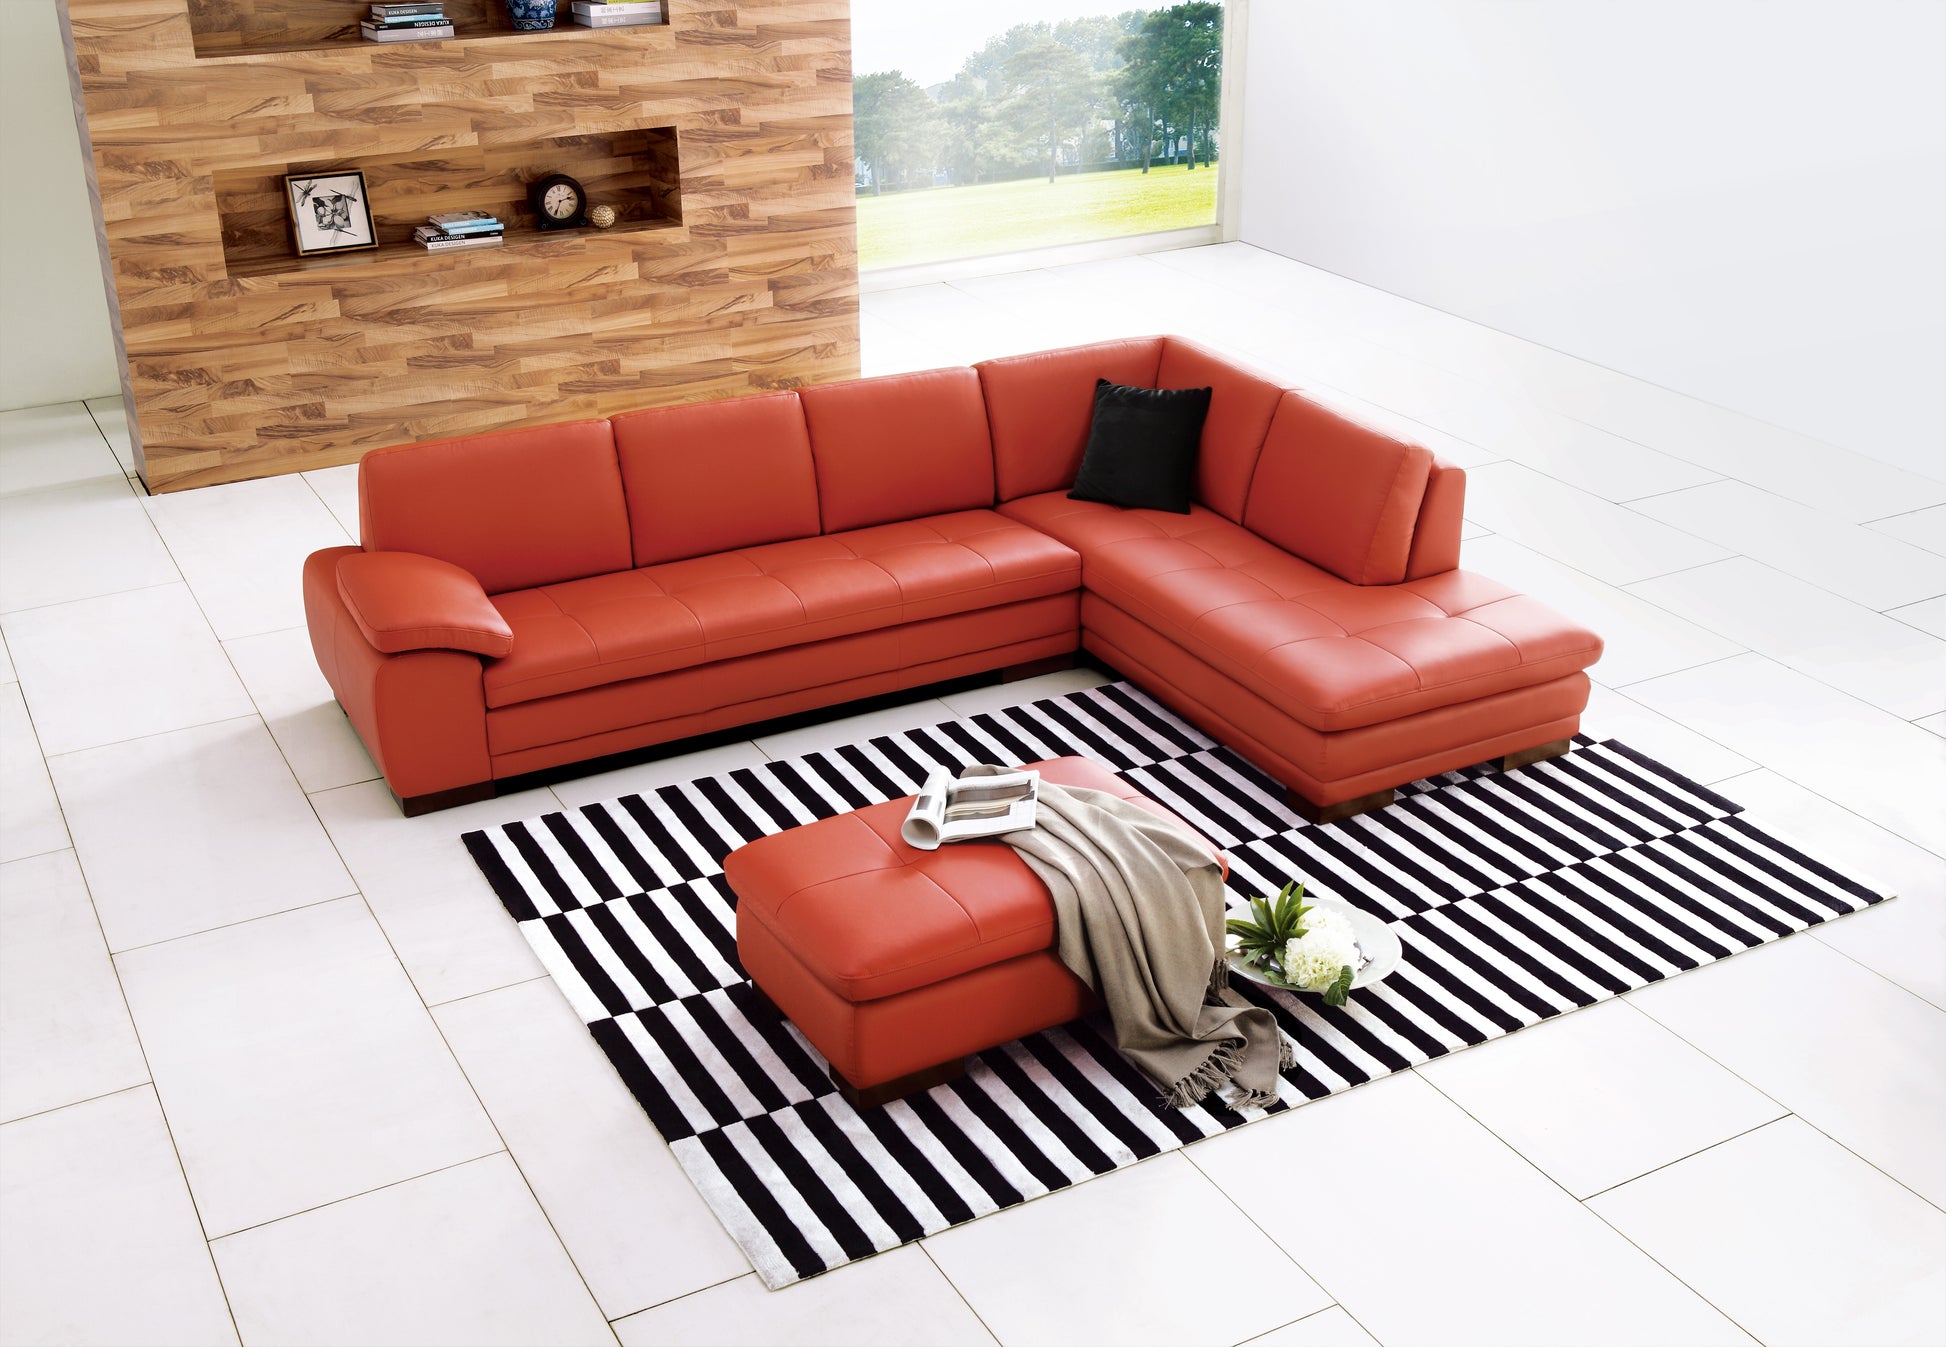 625 Italian Leather Sectional Sofa Pumpkin RHF by JM